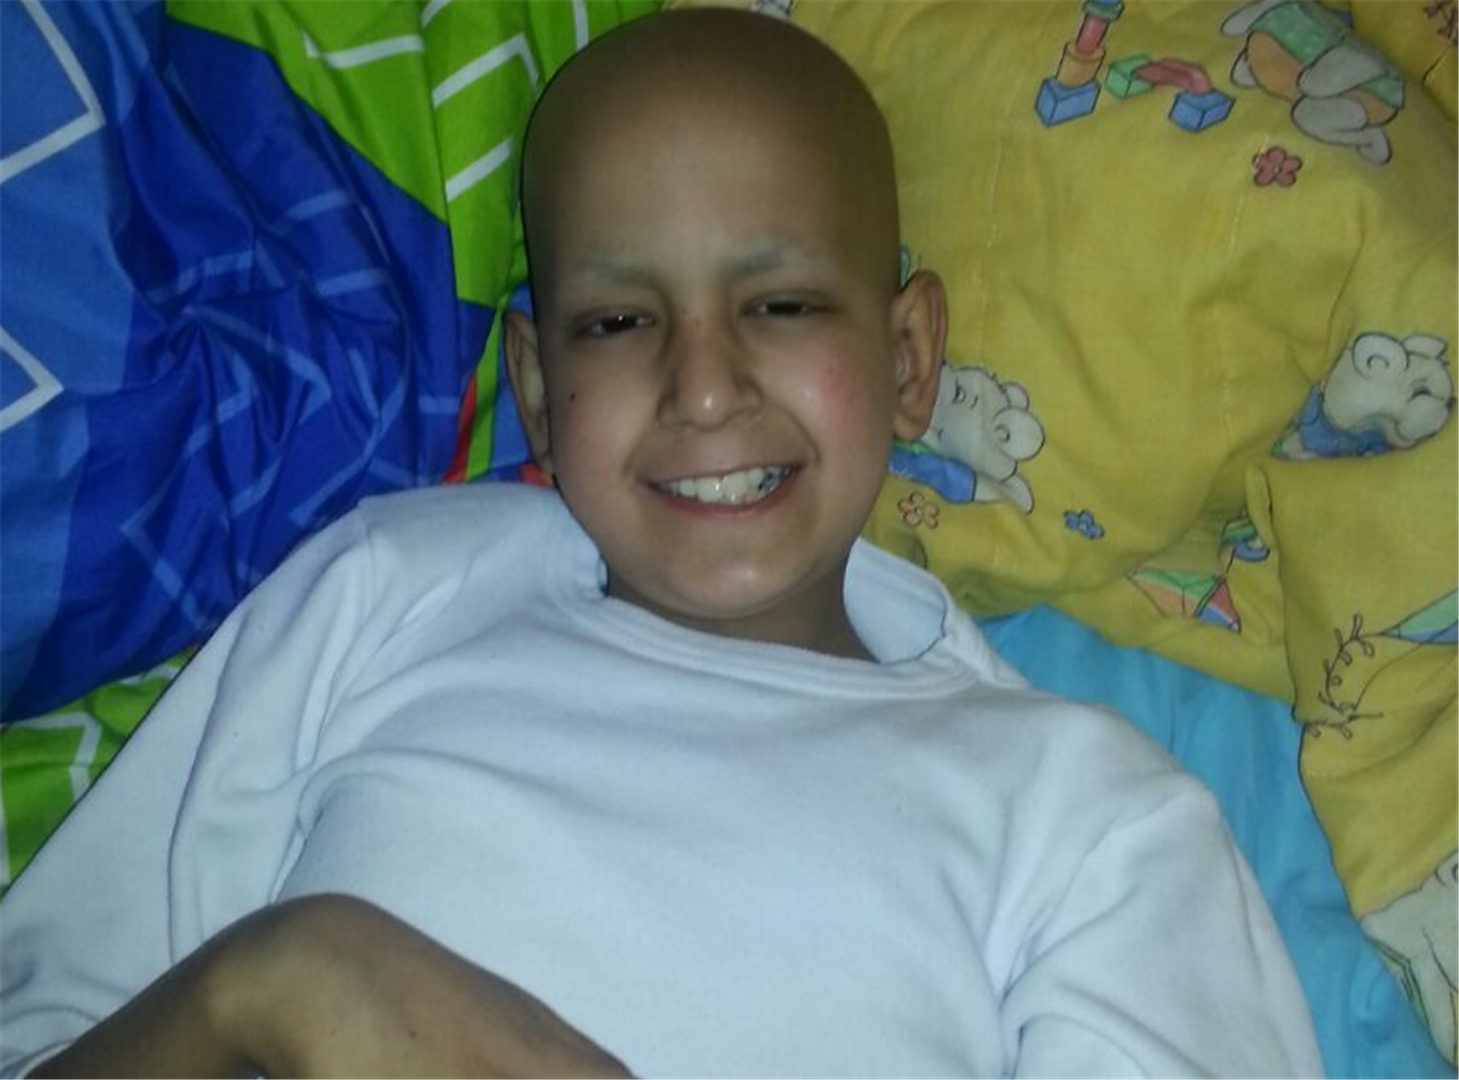 Noam, 11, was diagnosed in 2013